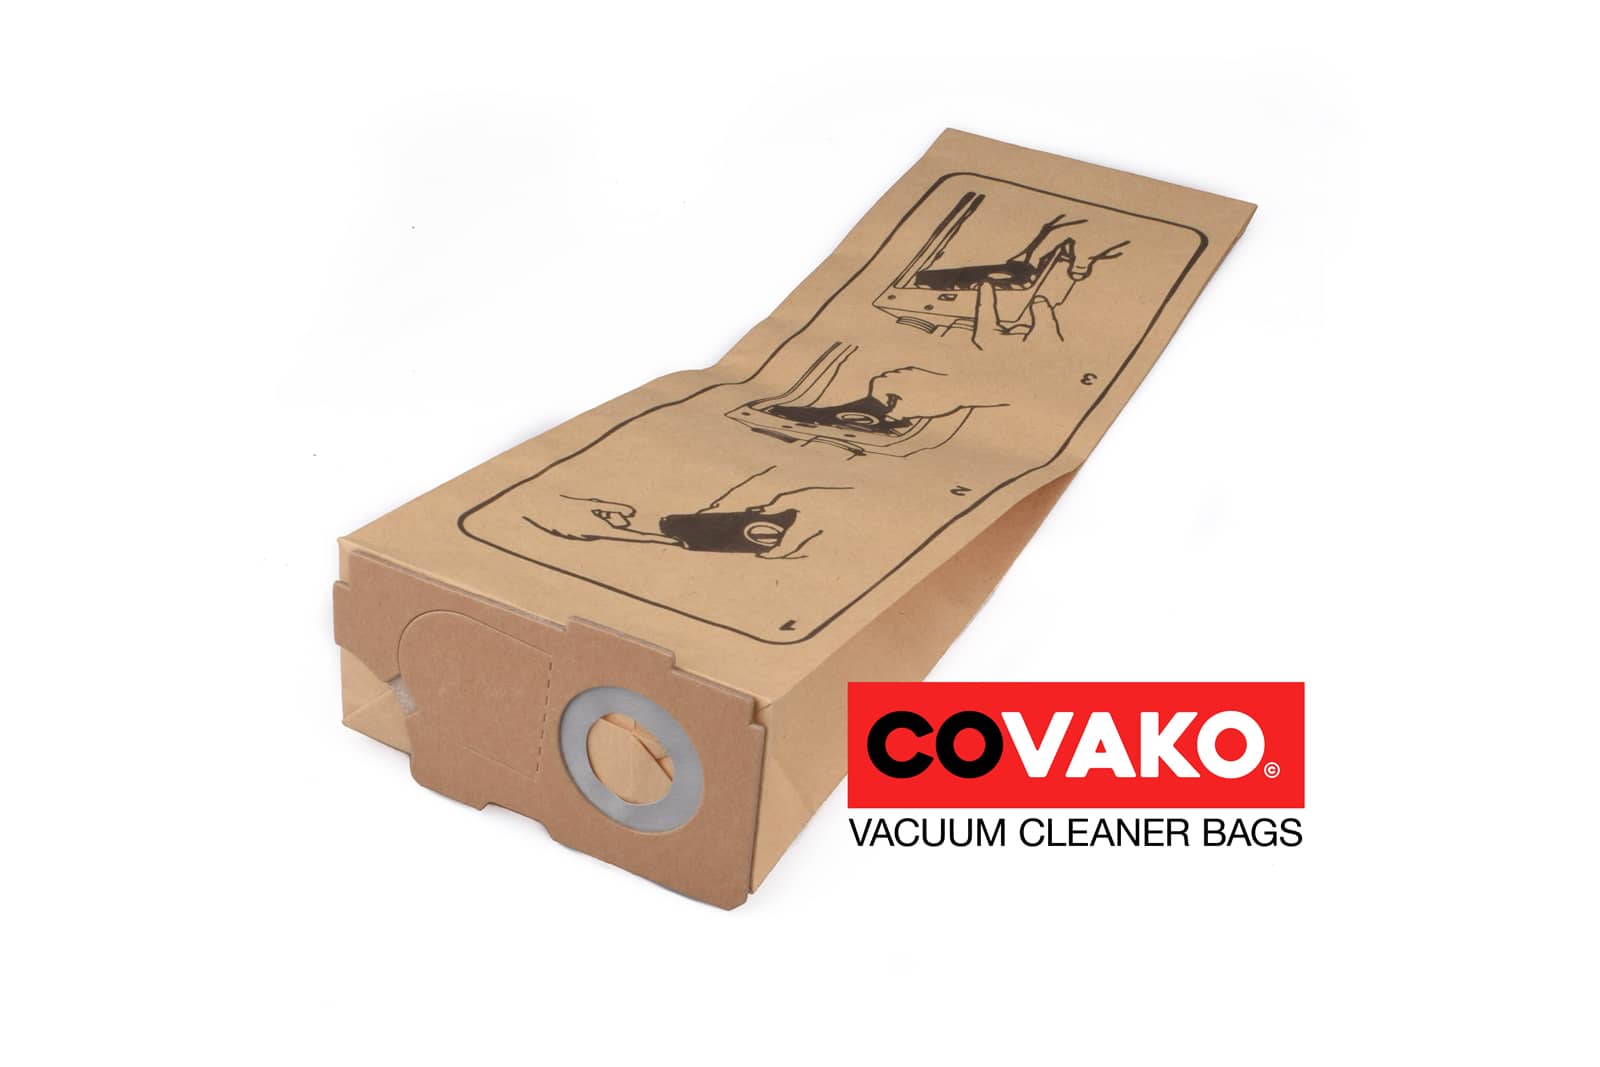 Columbus TK46e / Paper - Columbus vacuum cleaner bags